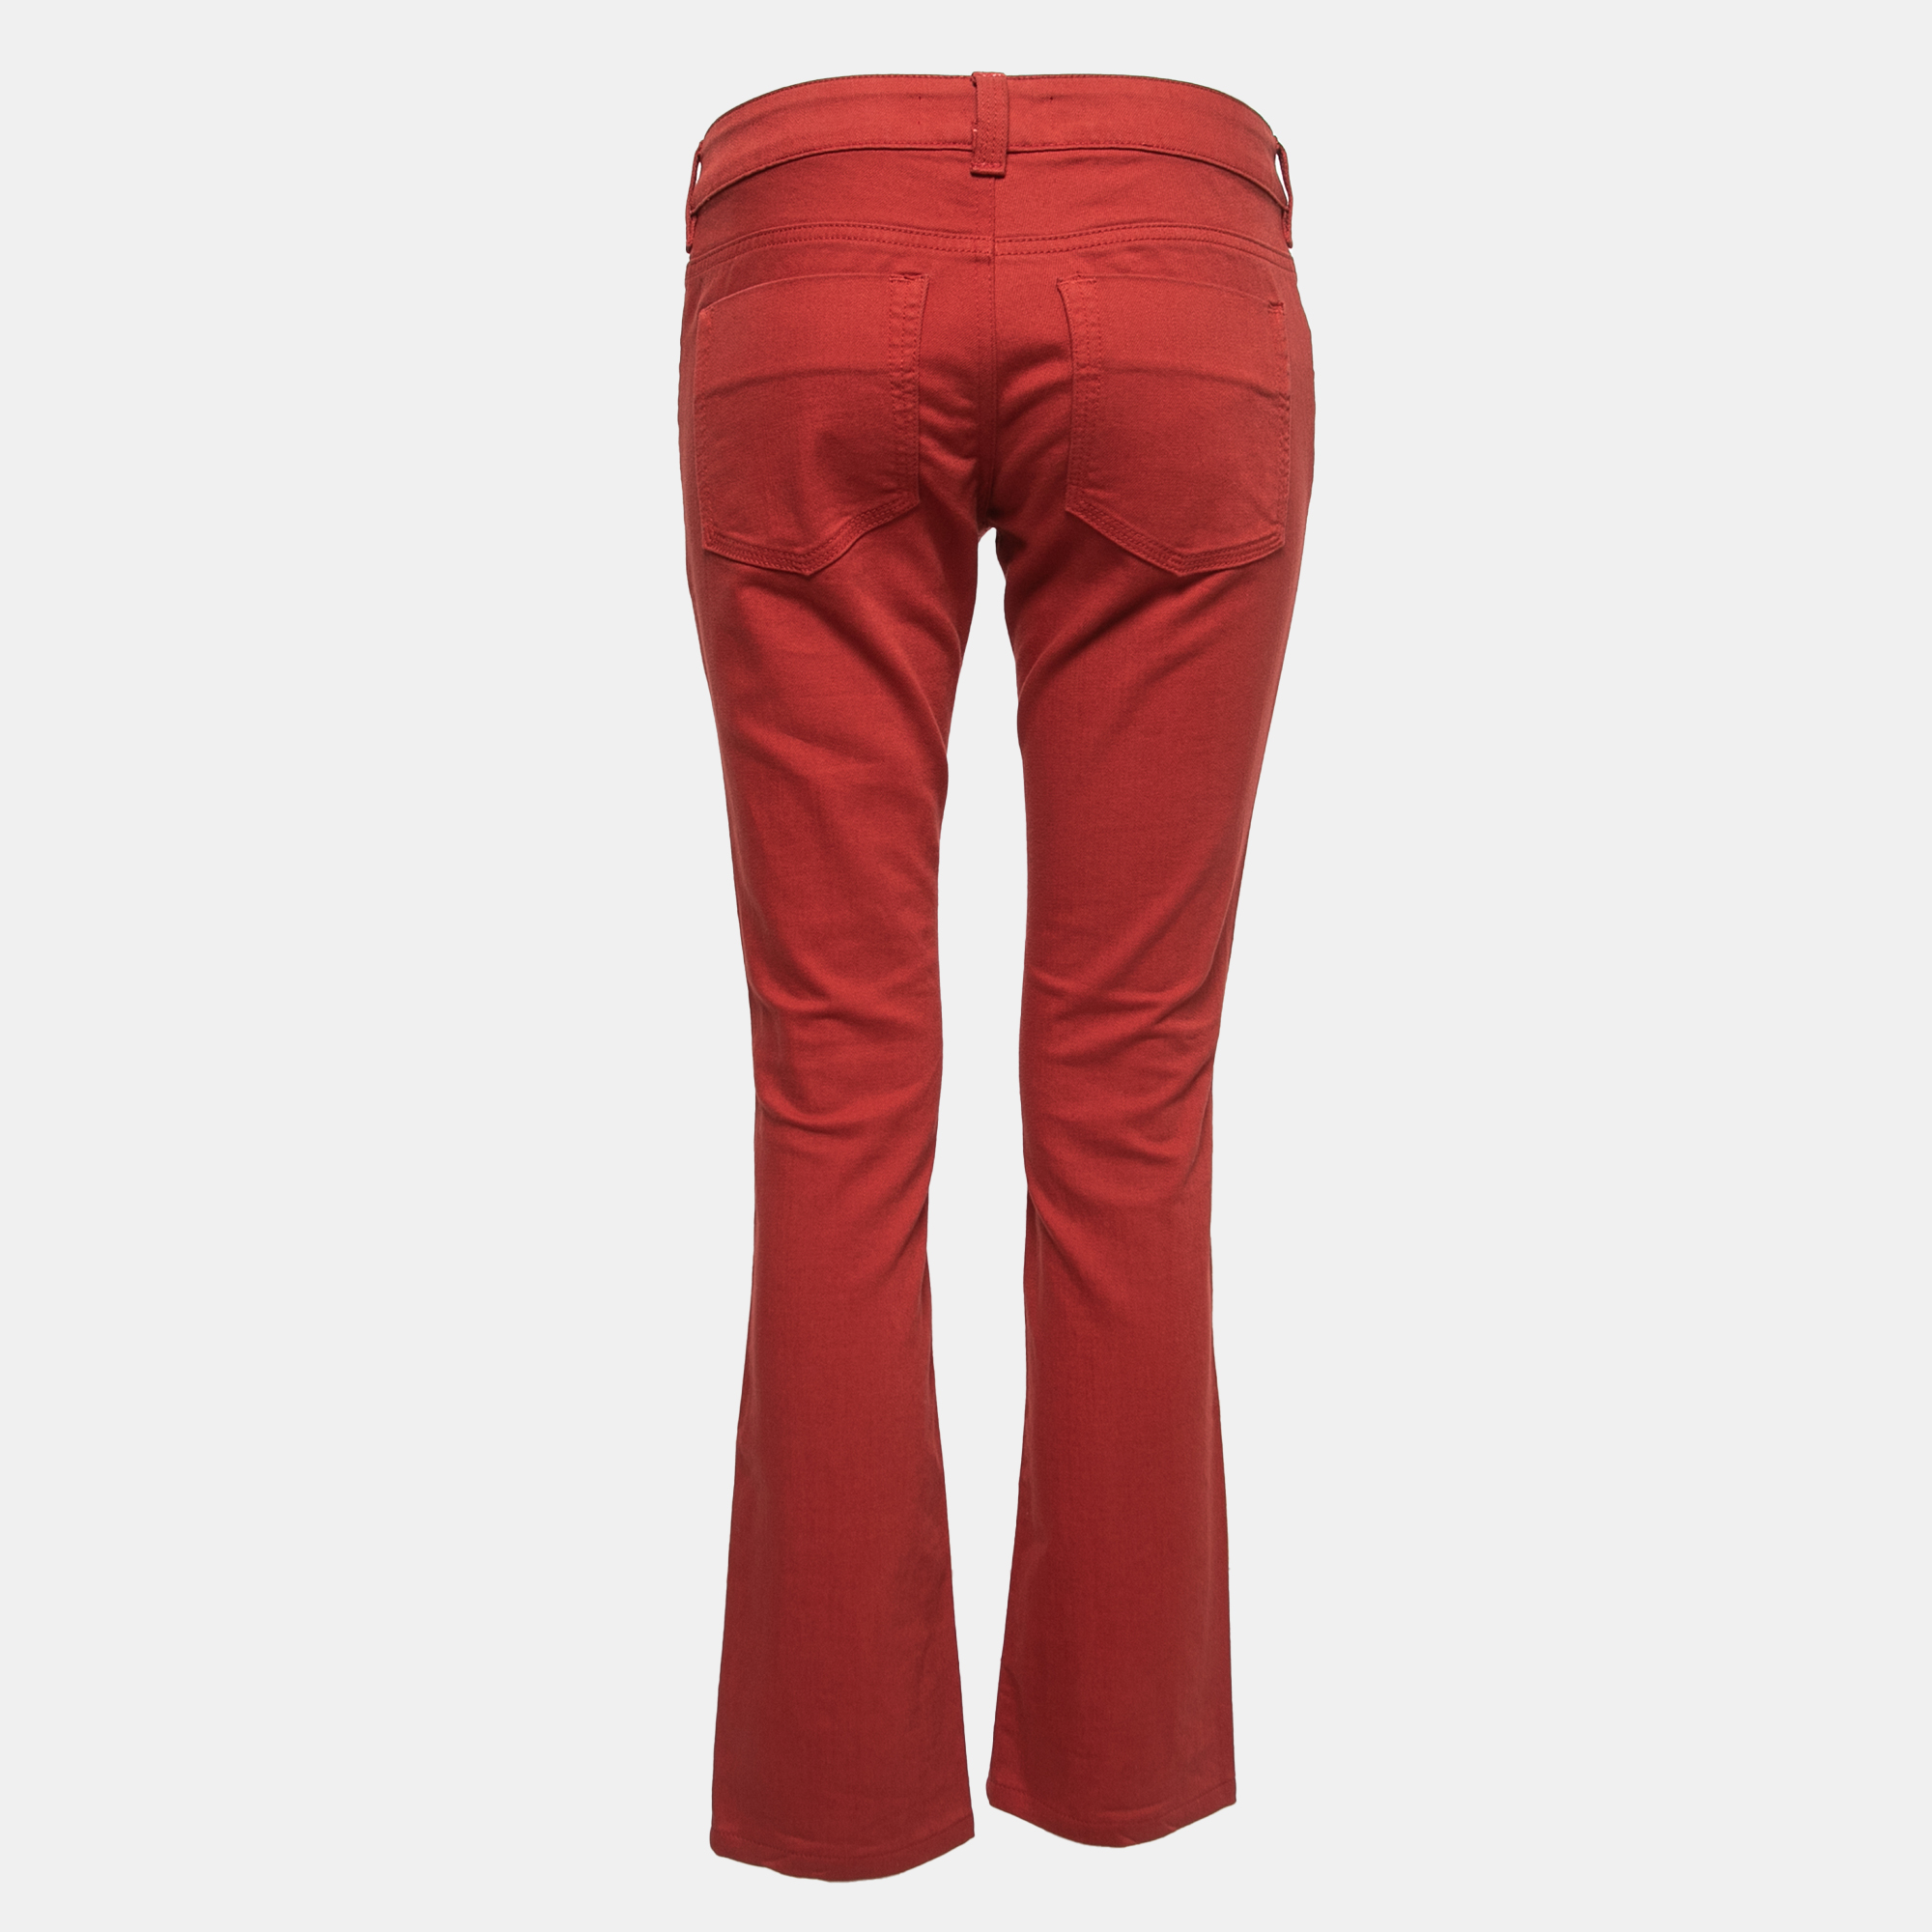  Stella McCartney Red Stretch Denim Jeans M Waist 29